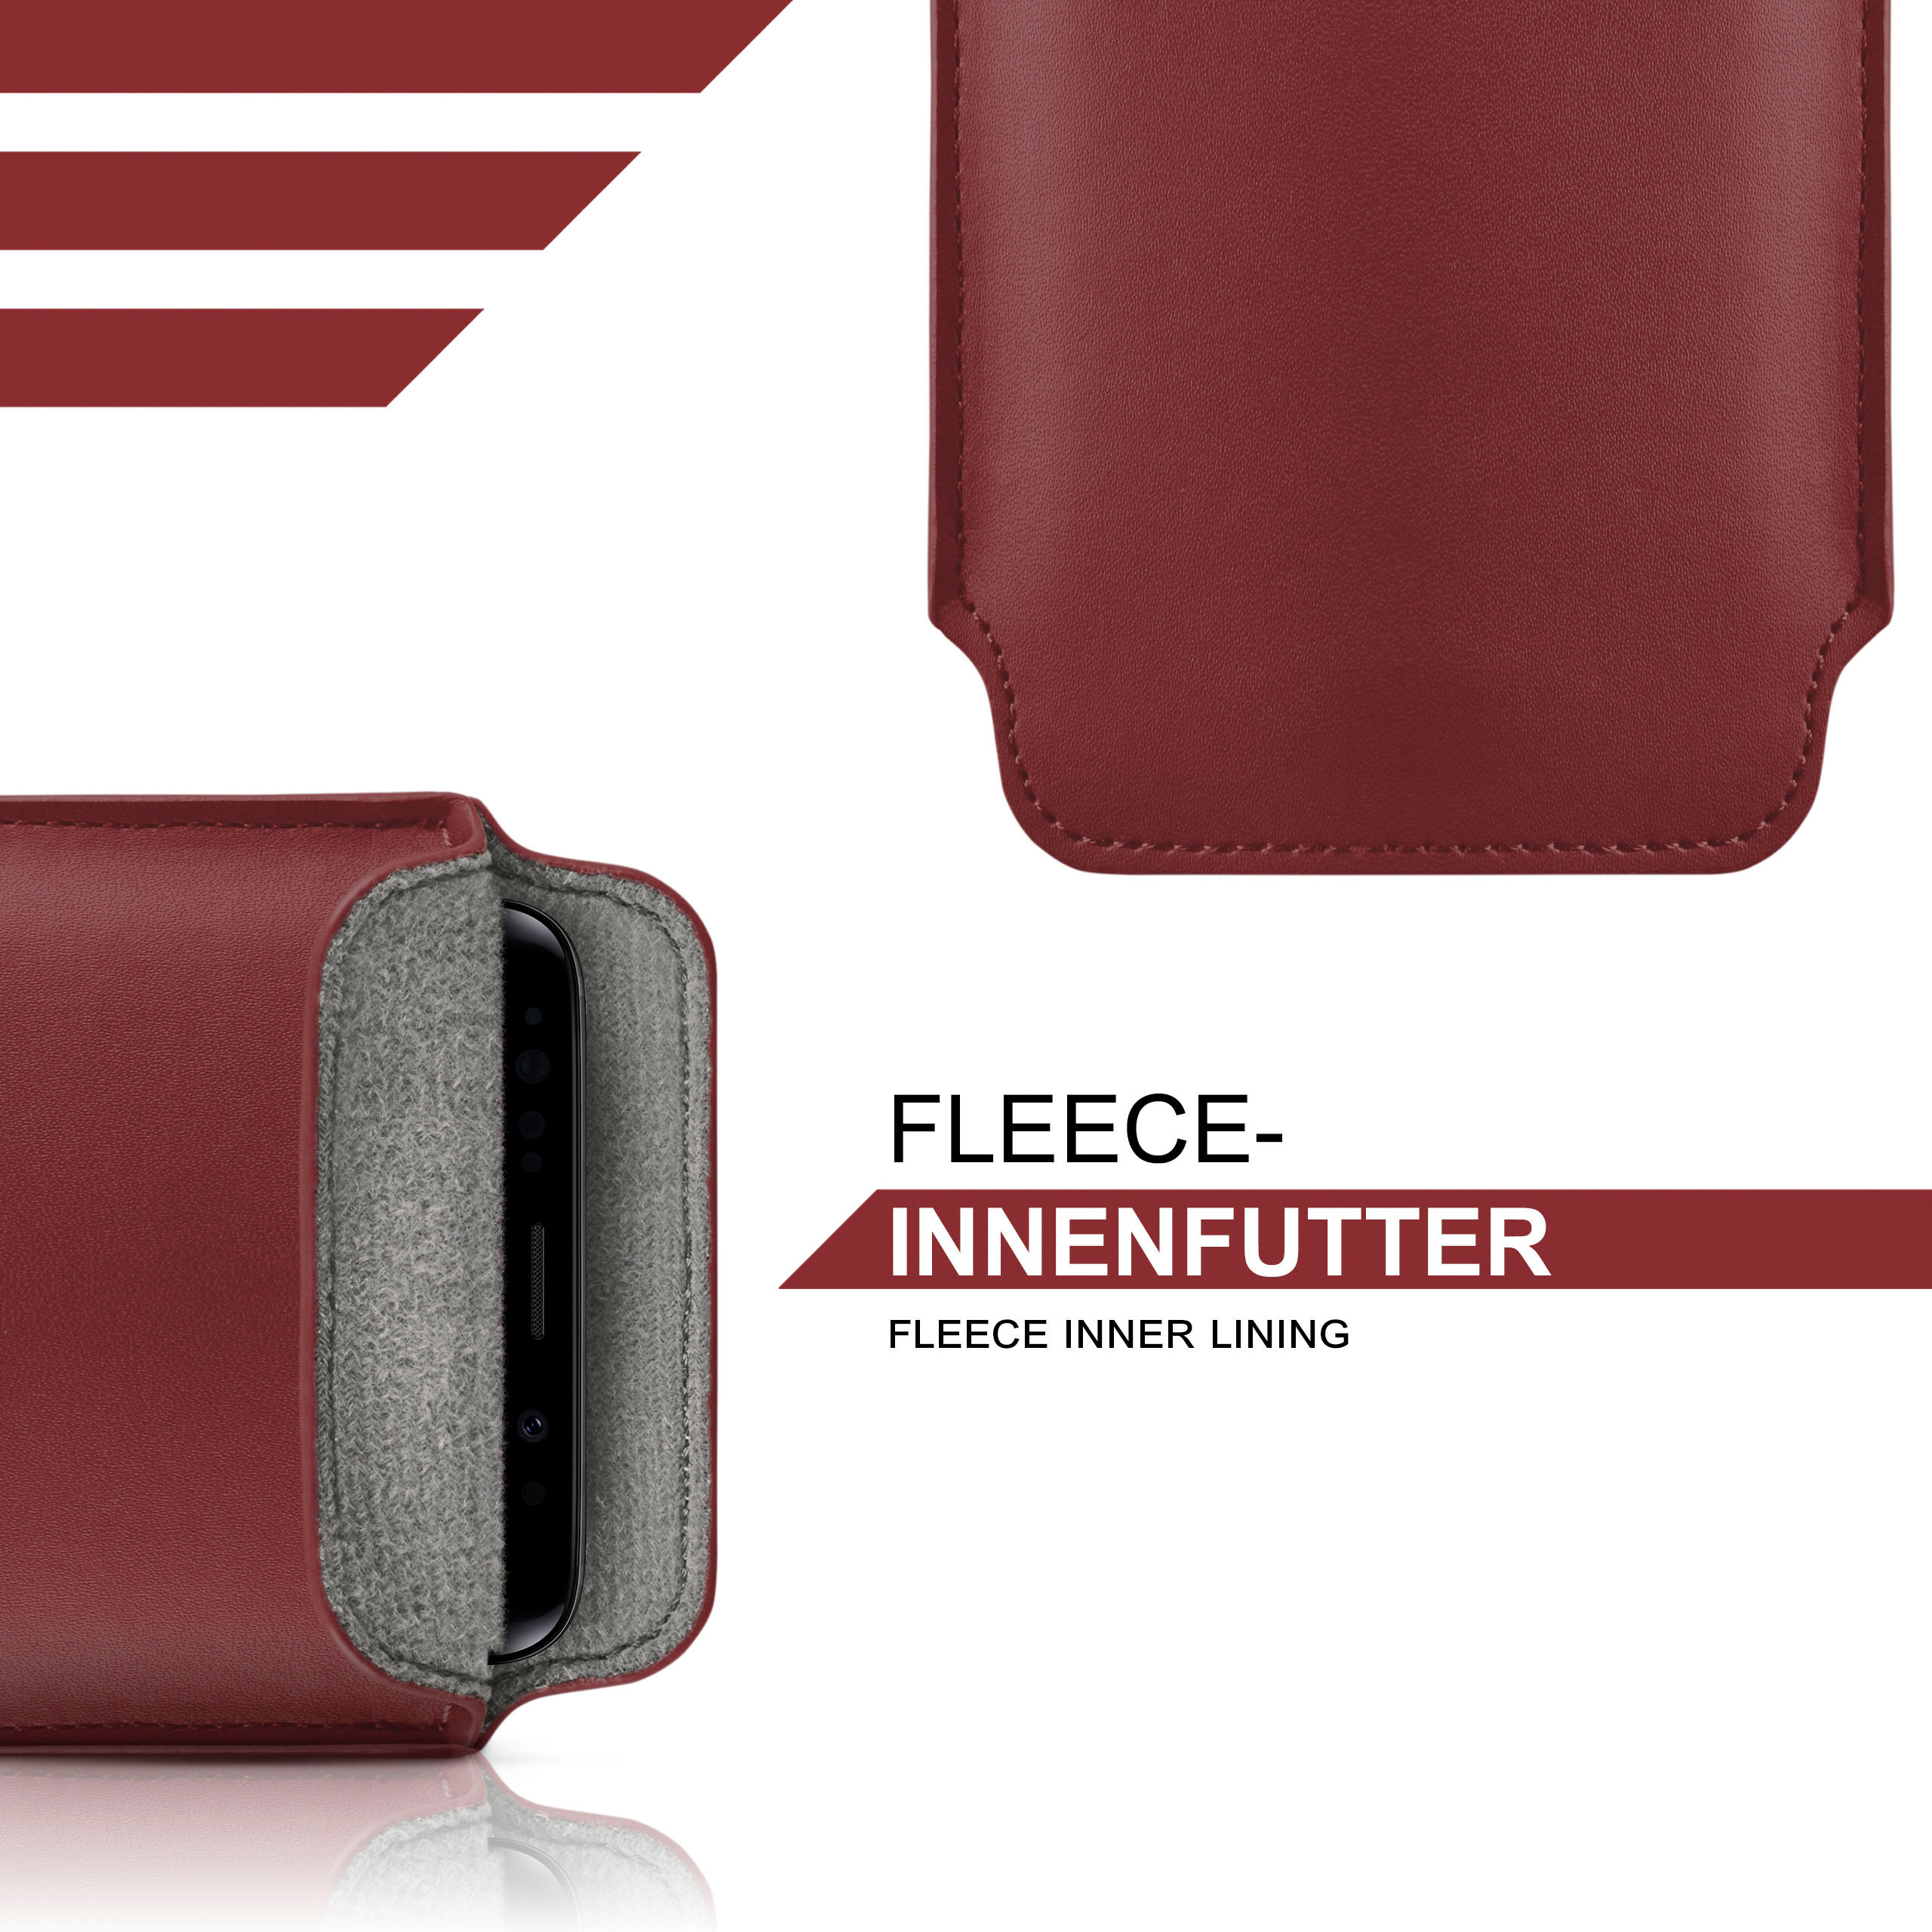 MOEX Slide Case, Full Cover, Zest Acer, Plus, Maroon-Red Liquid